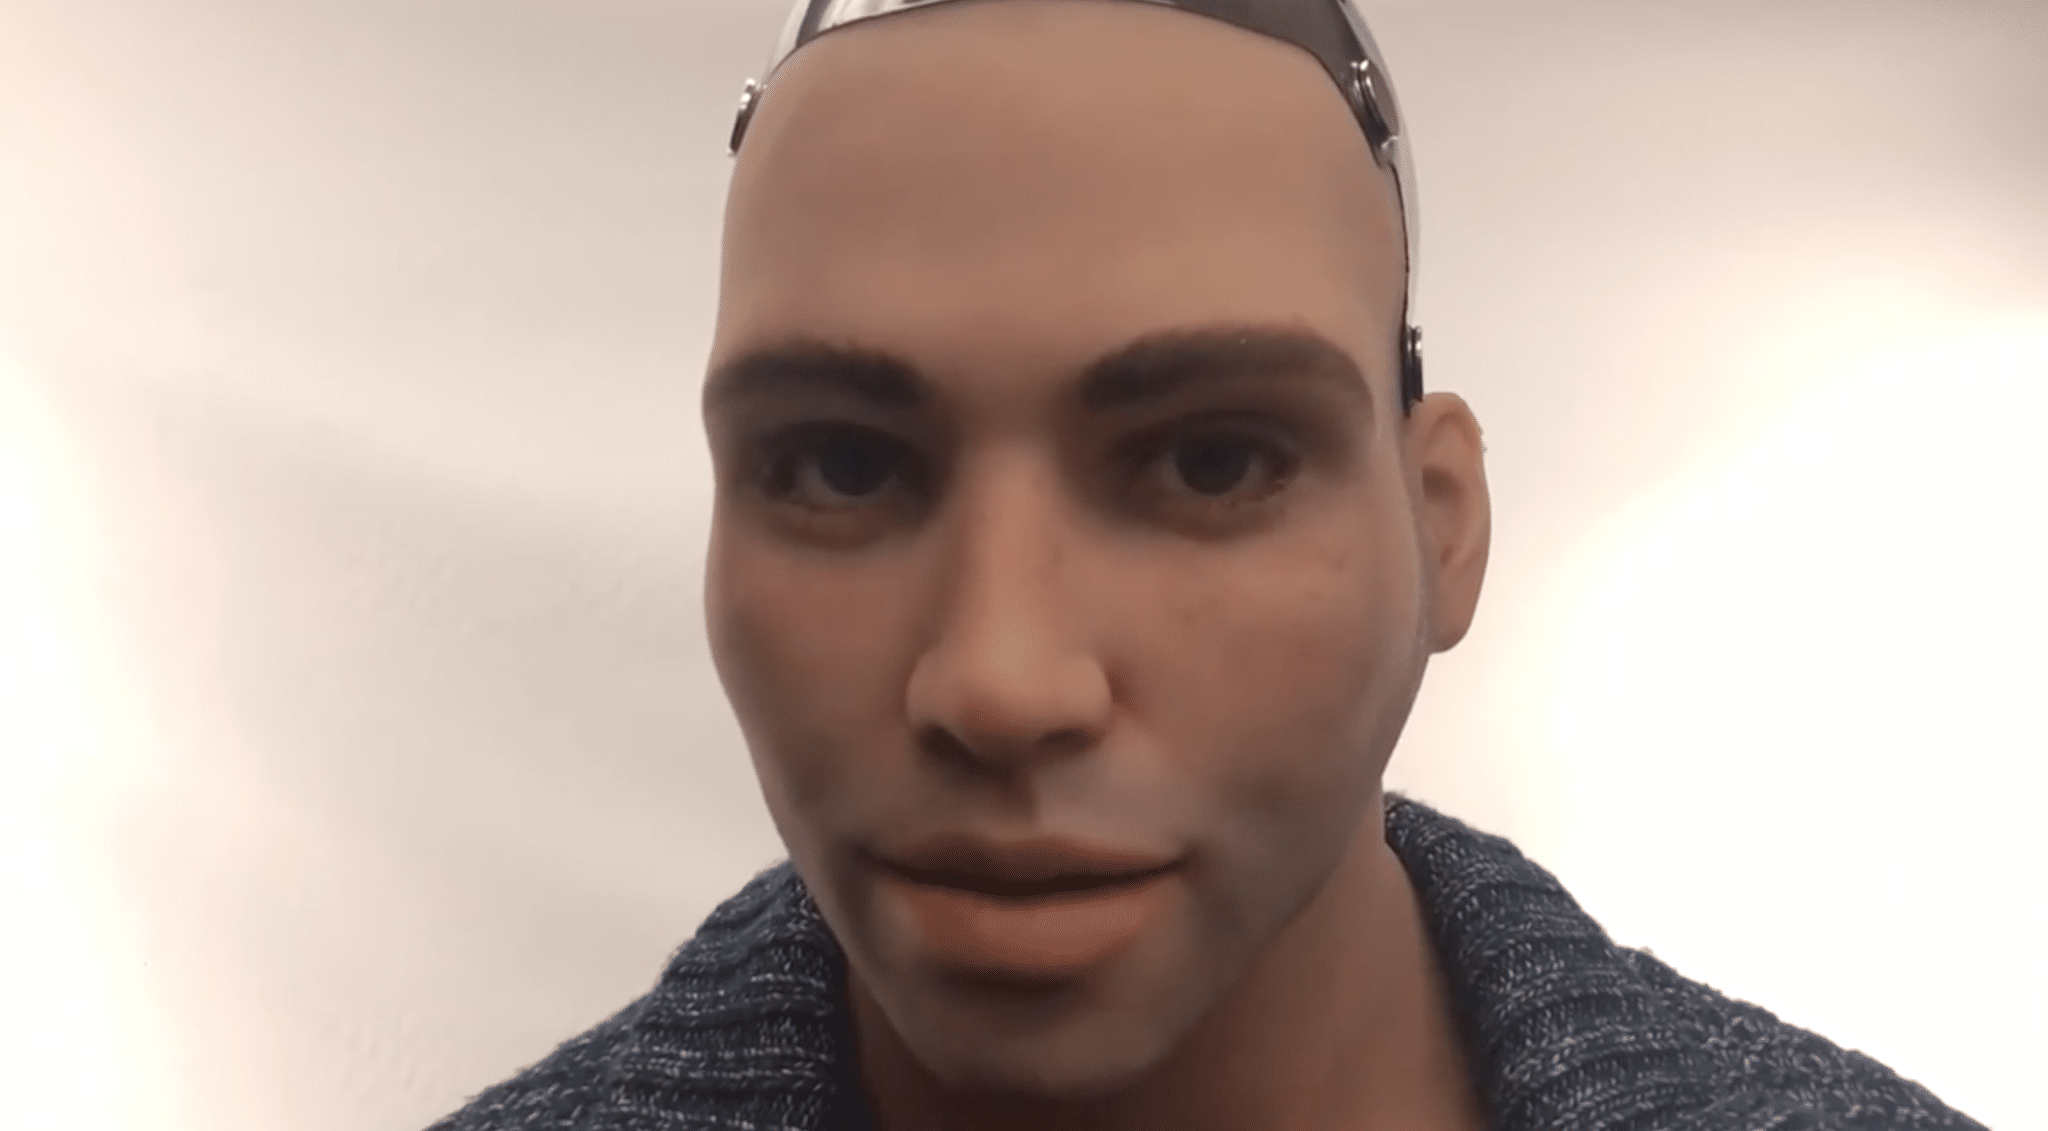 Best of Male sex robot videos